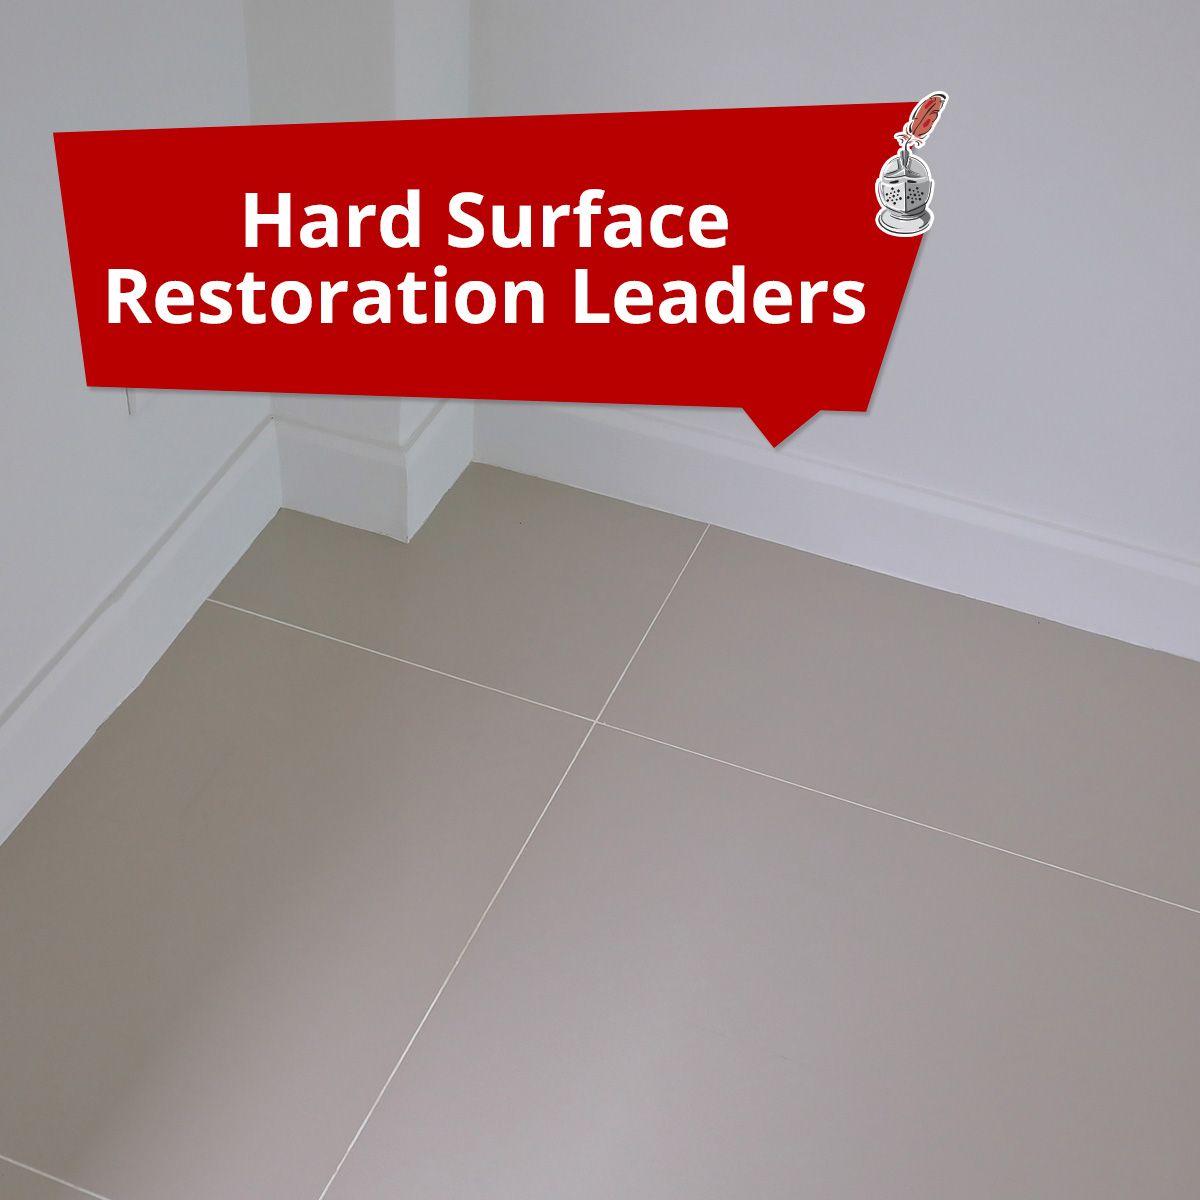 Hard Surface Restoration Leaders